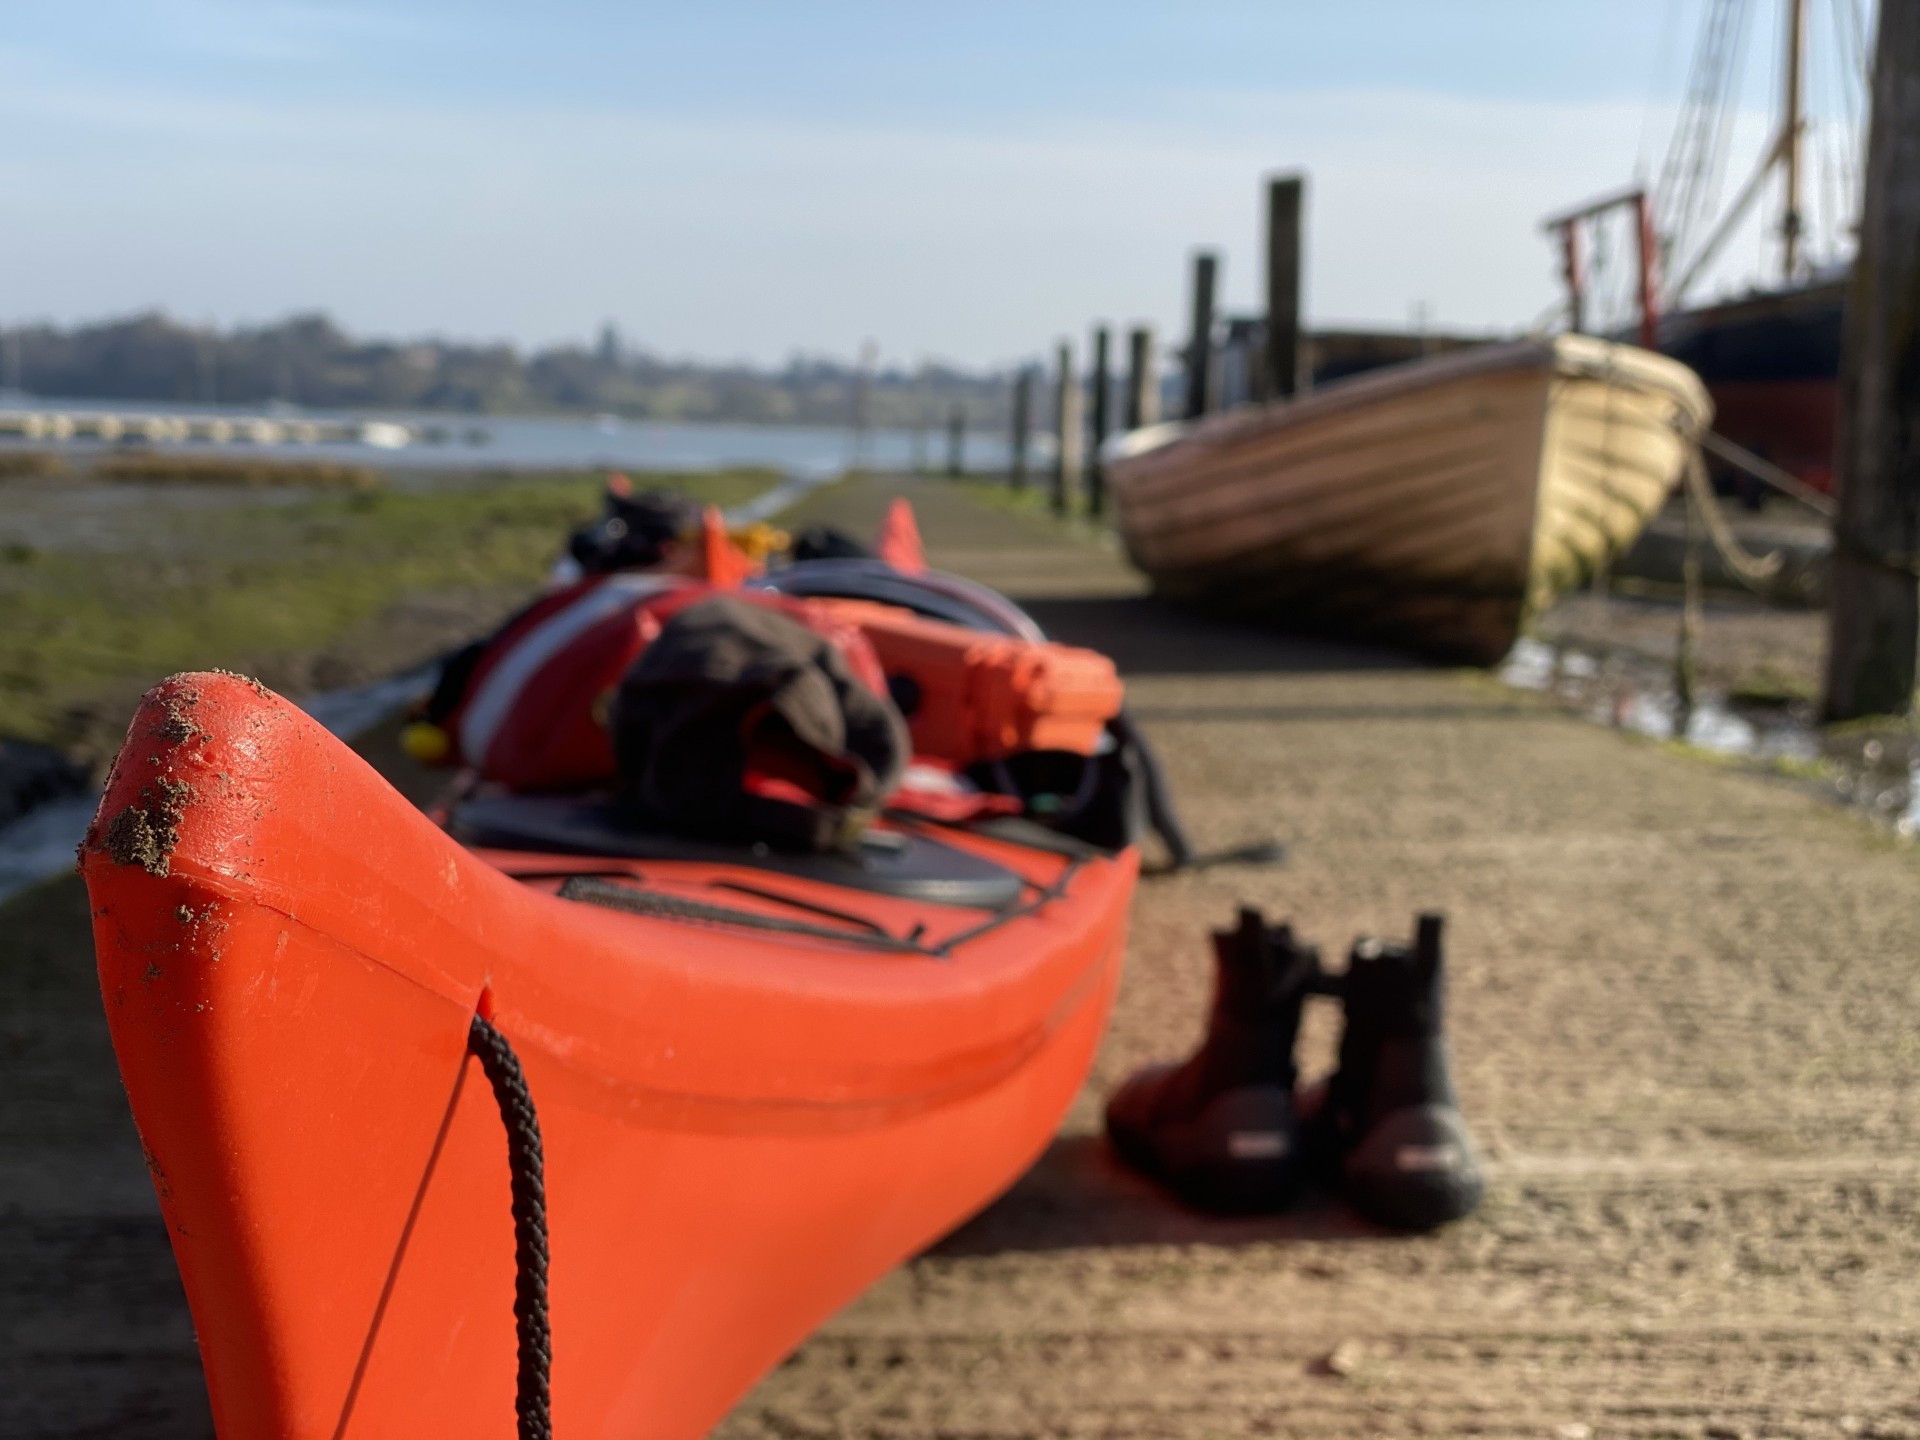 An orange sea kayak on the slipway ready to launch.